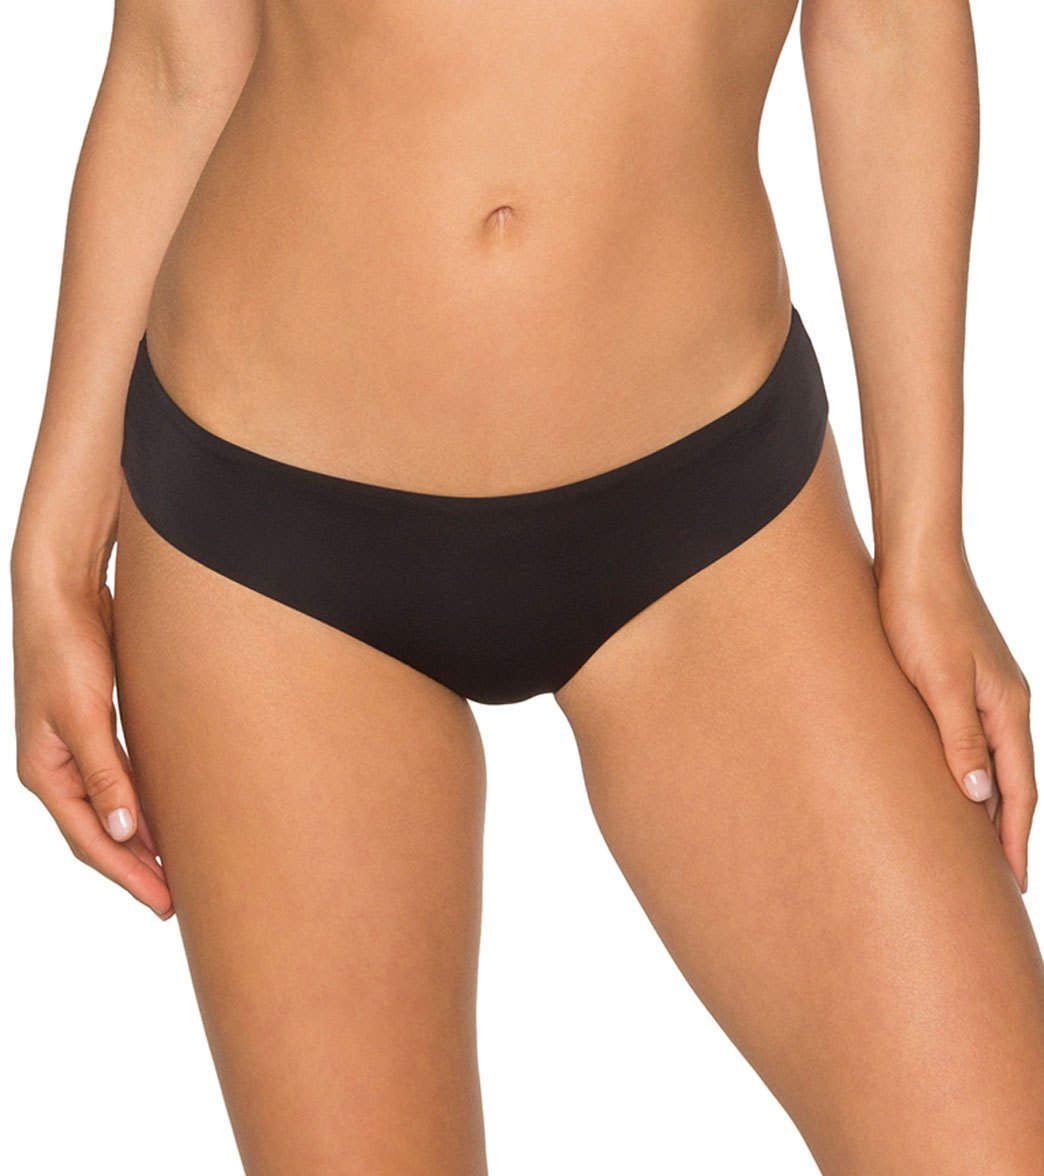 Aerin Rose Solid Zuel Bikini Bottom - Obsidian Xl - Swimoutlet.com